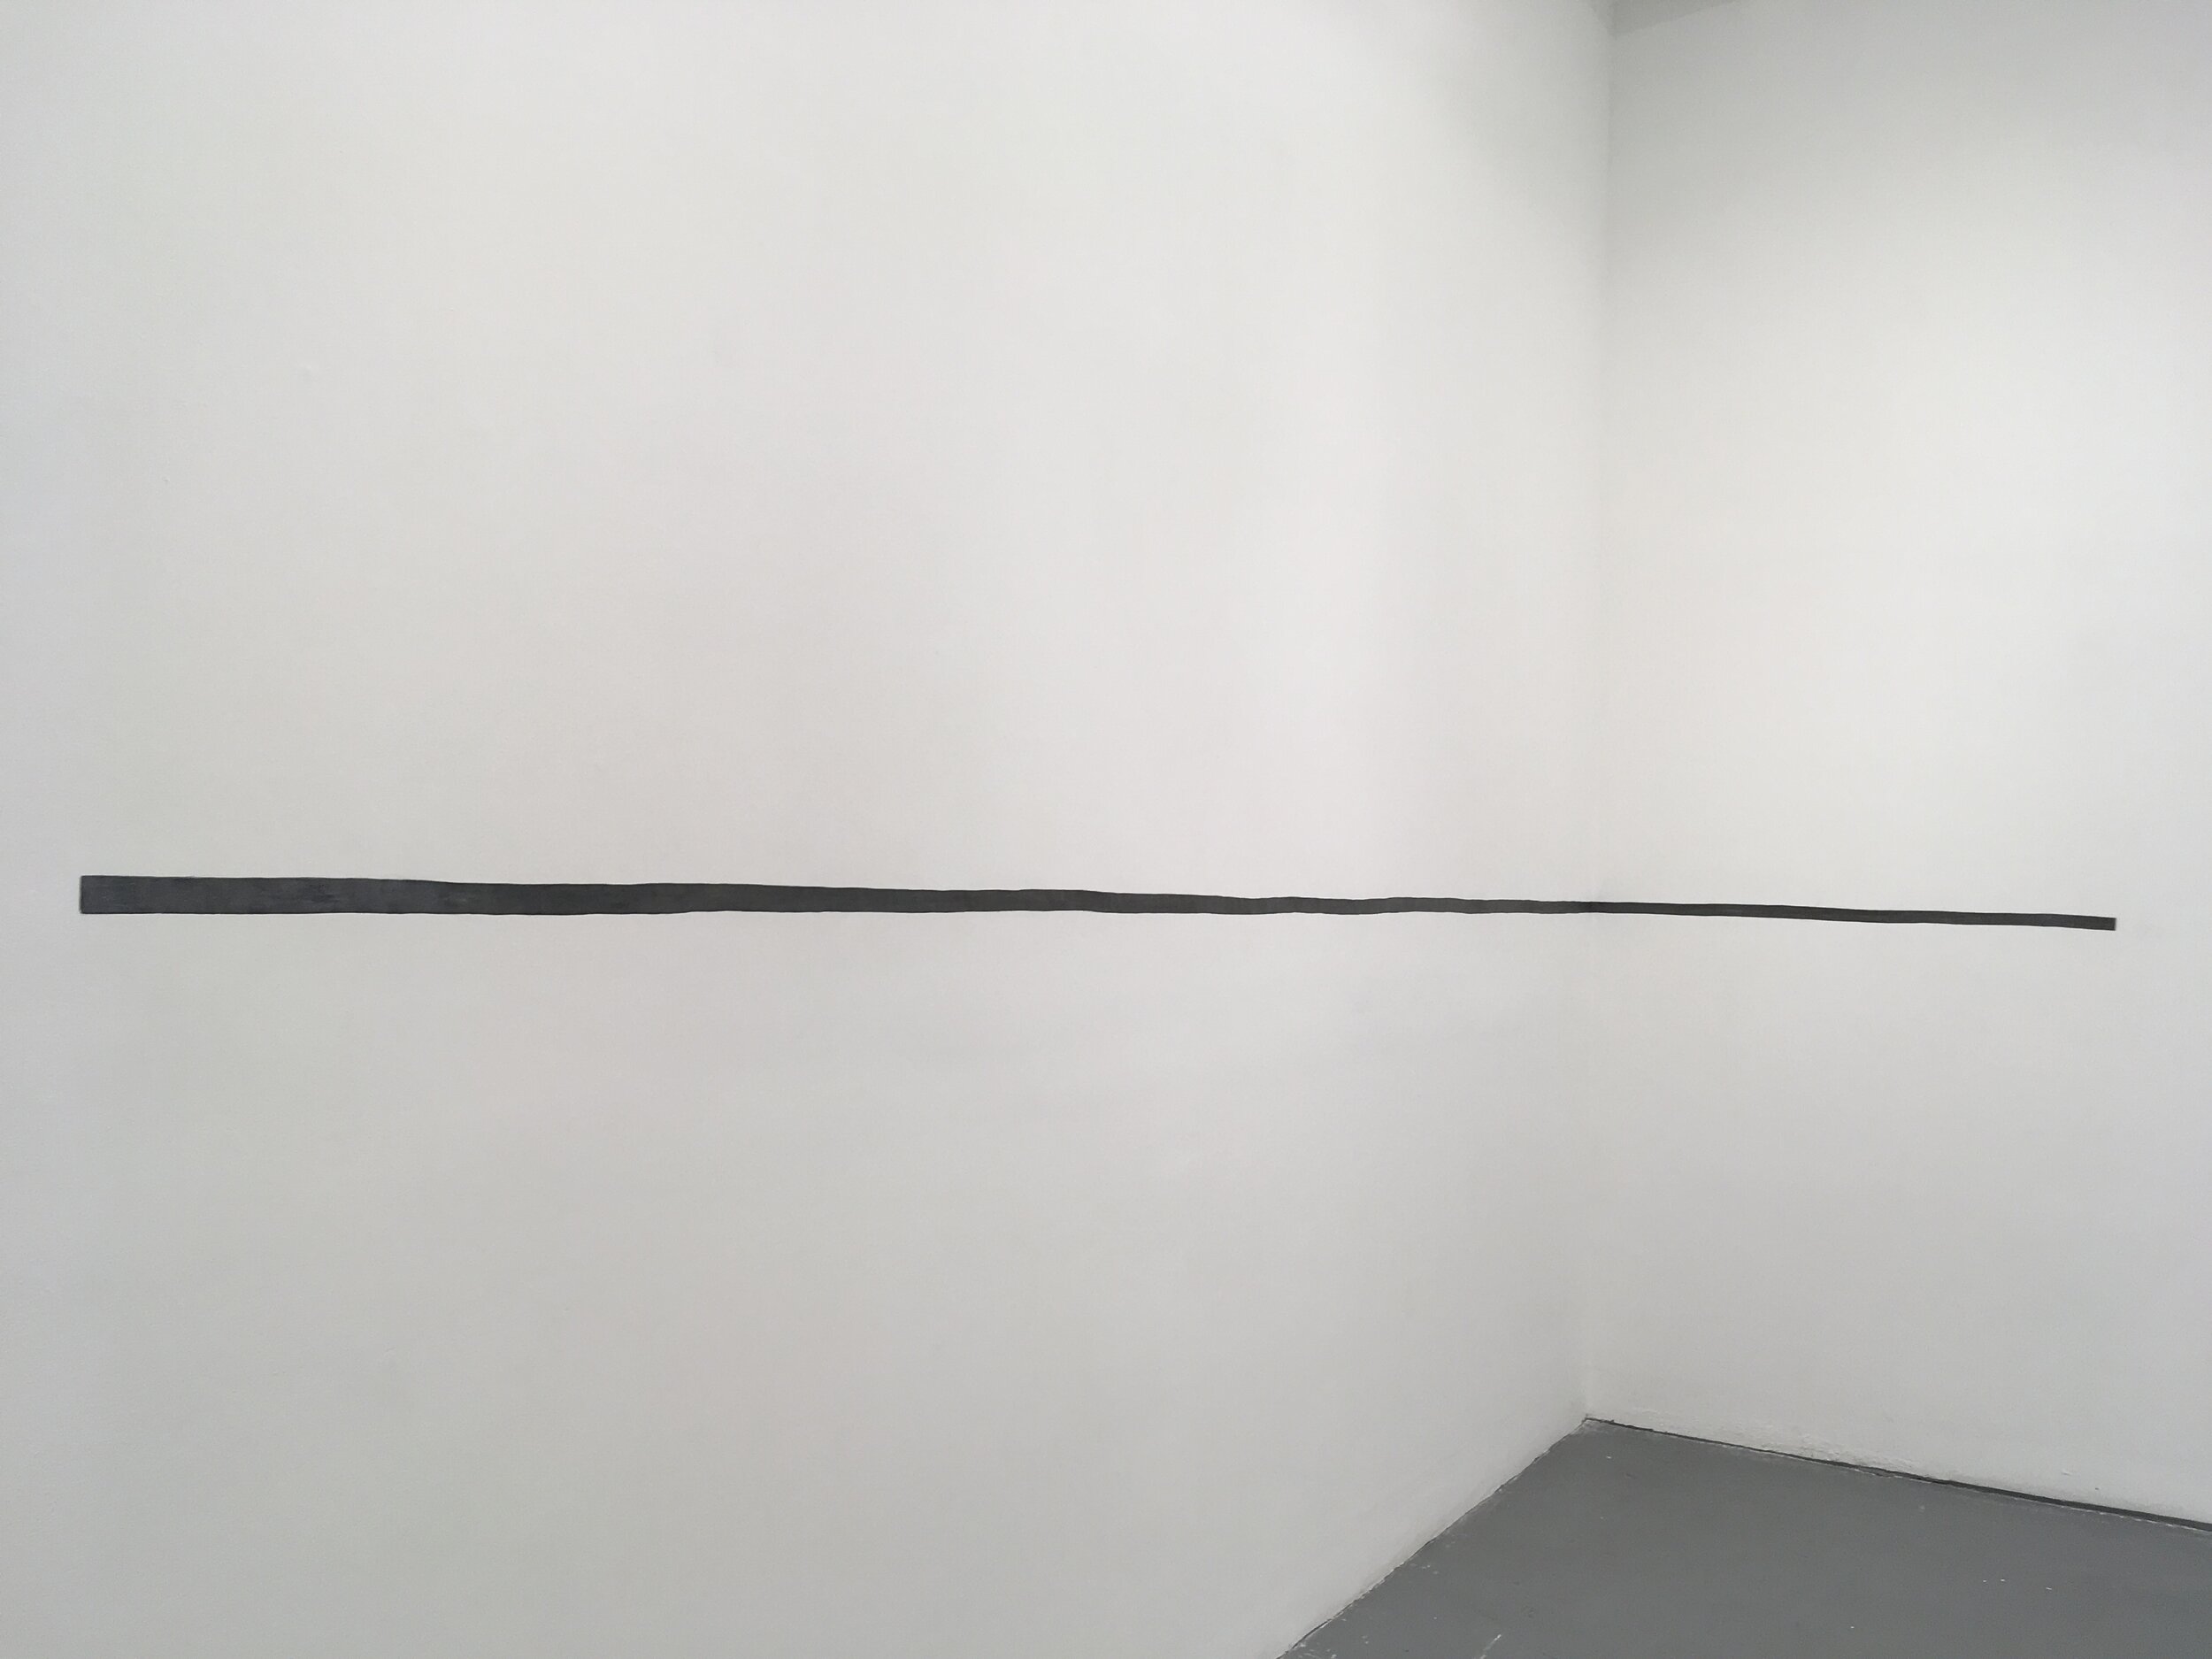  Klaus Von Nichtssagend September 6 - October 13, 2019  18 feet 8 inch Line Lead embedded into sheetrock wall 